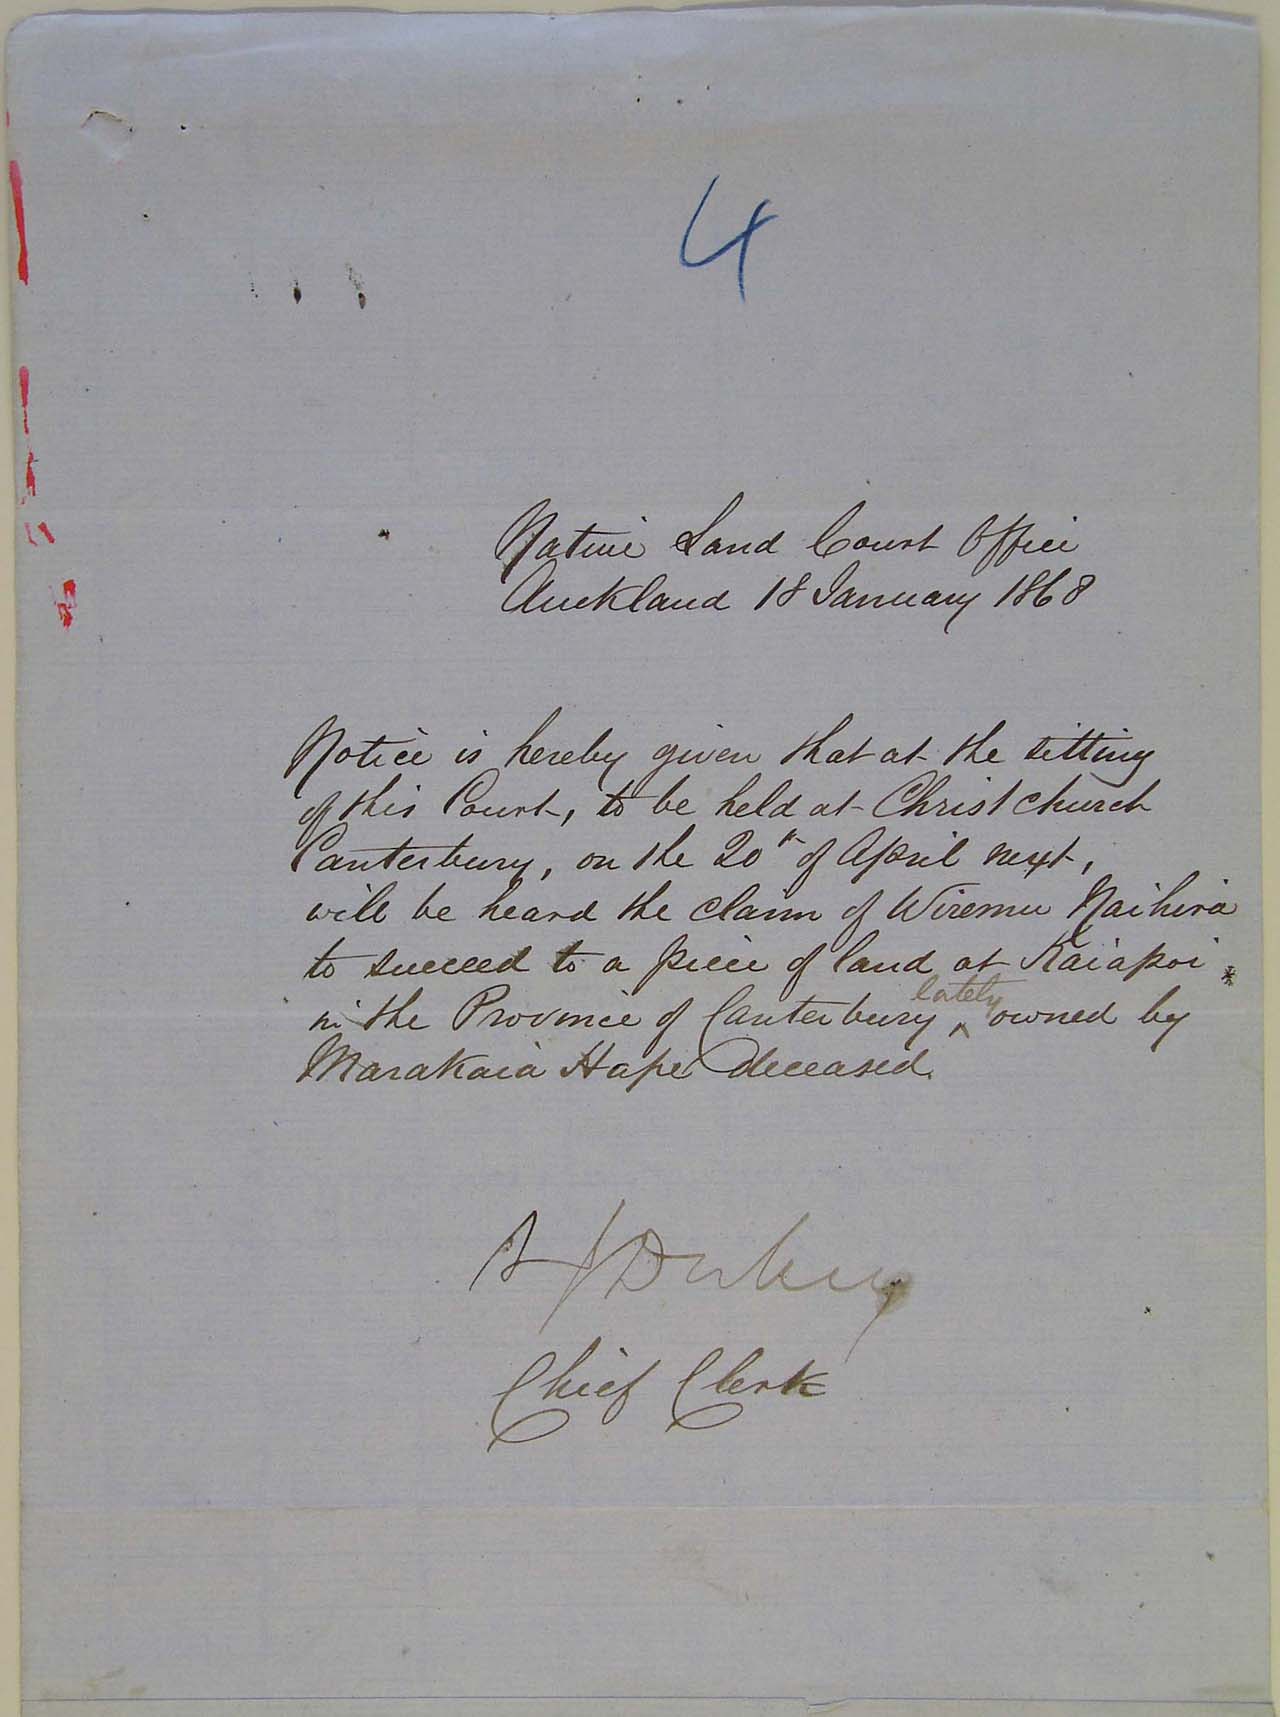 Land claim by Wi Naehira - 1868 - Top